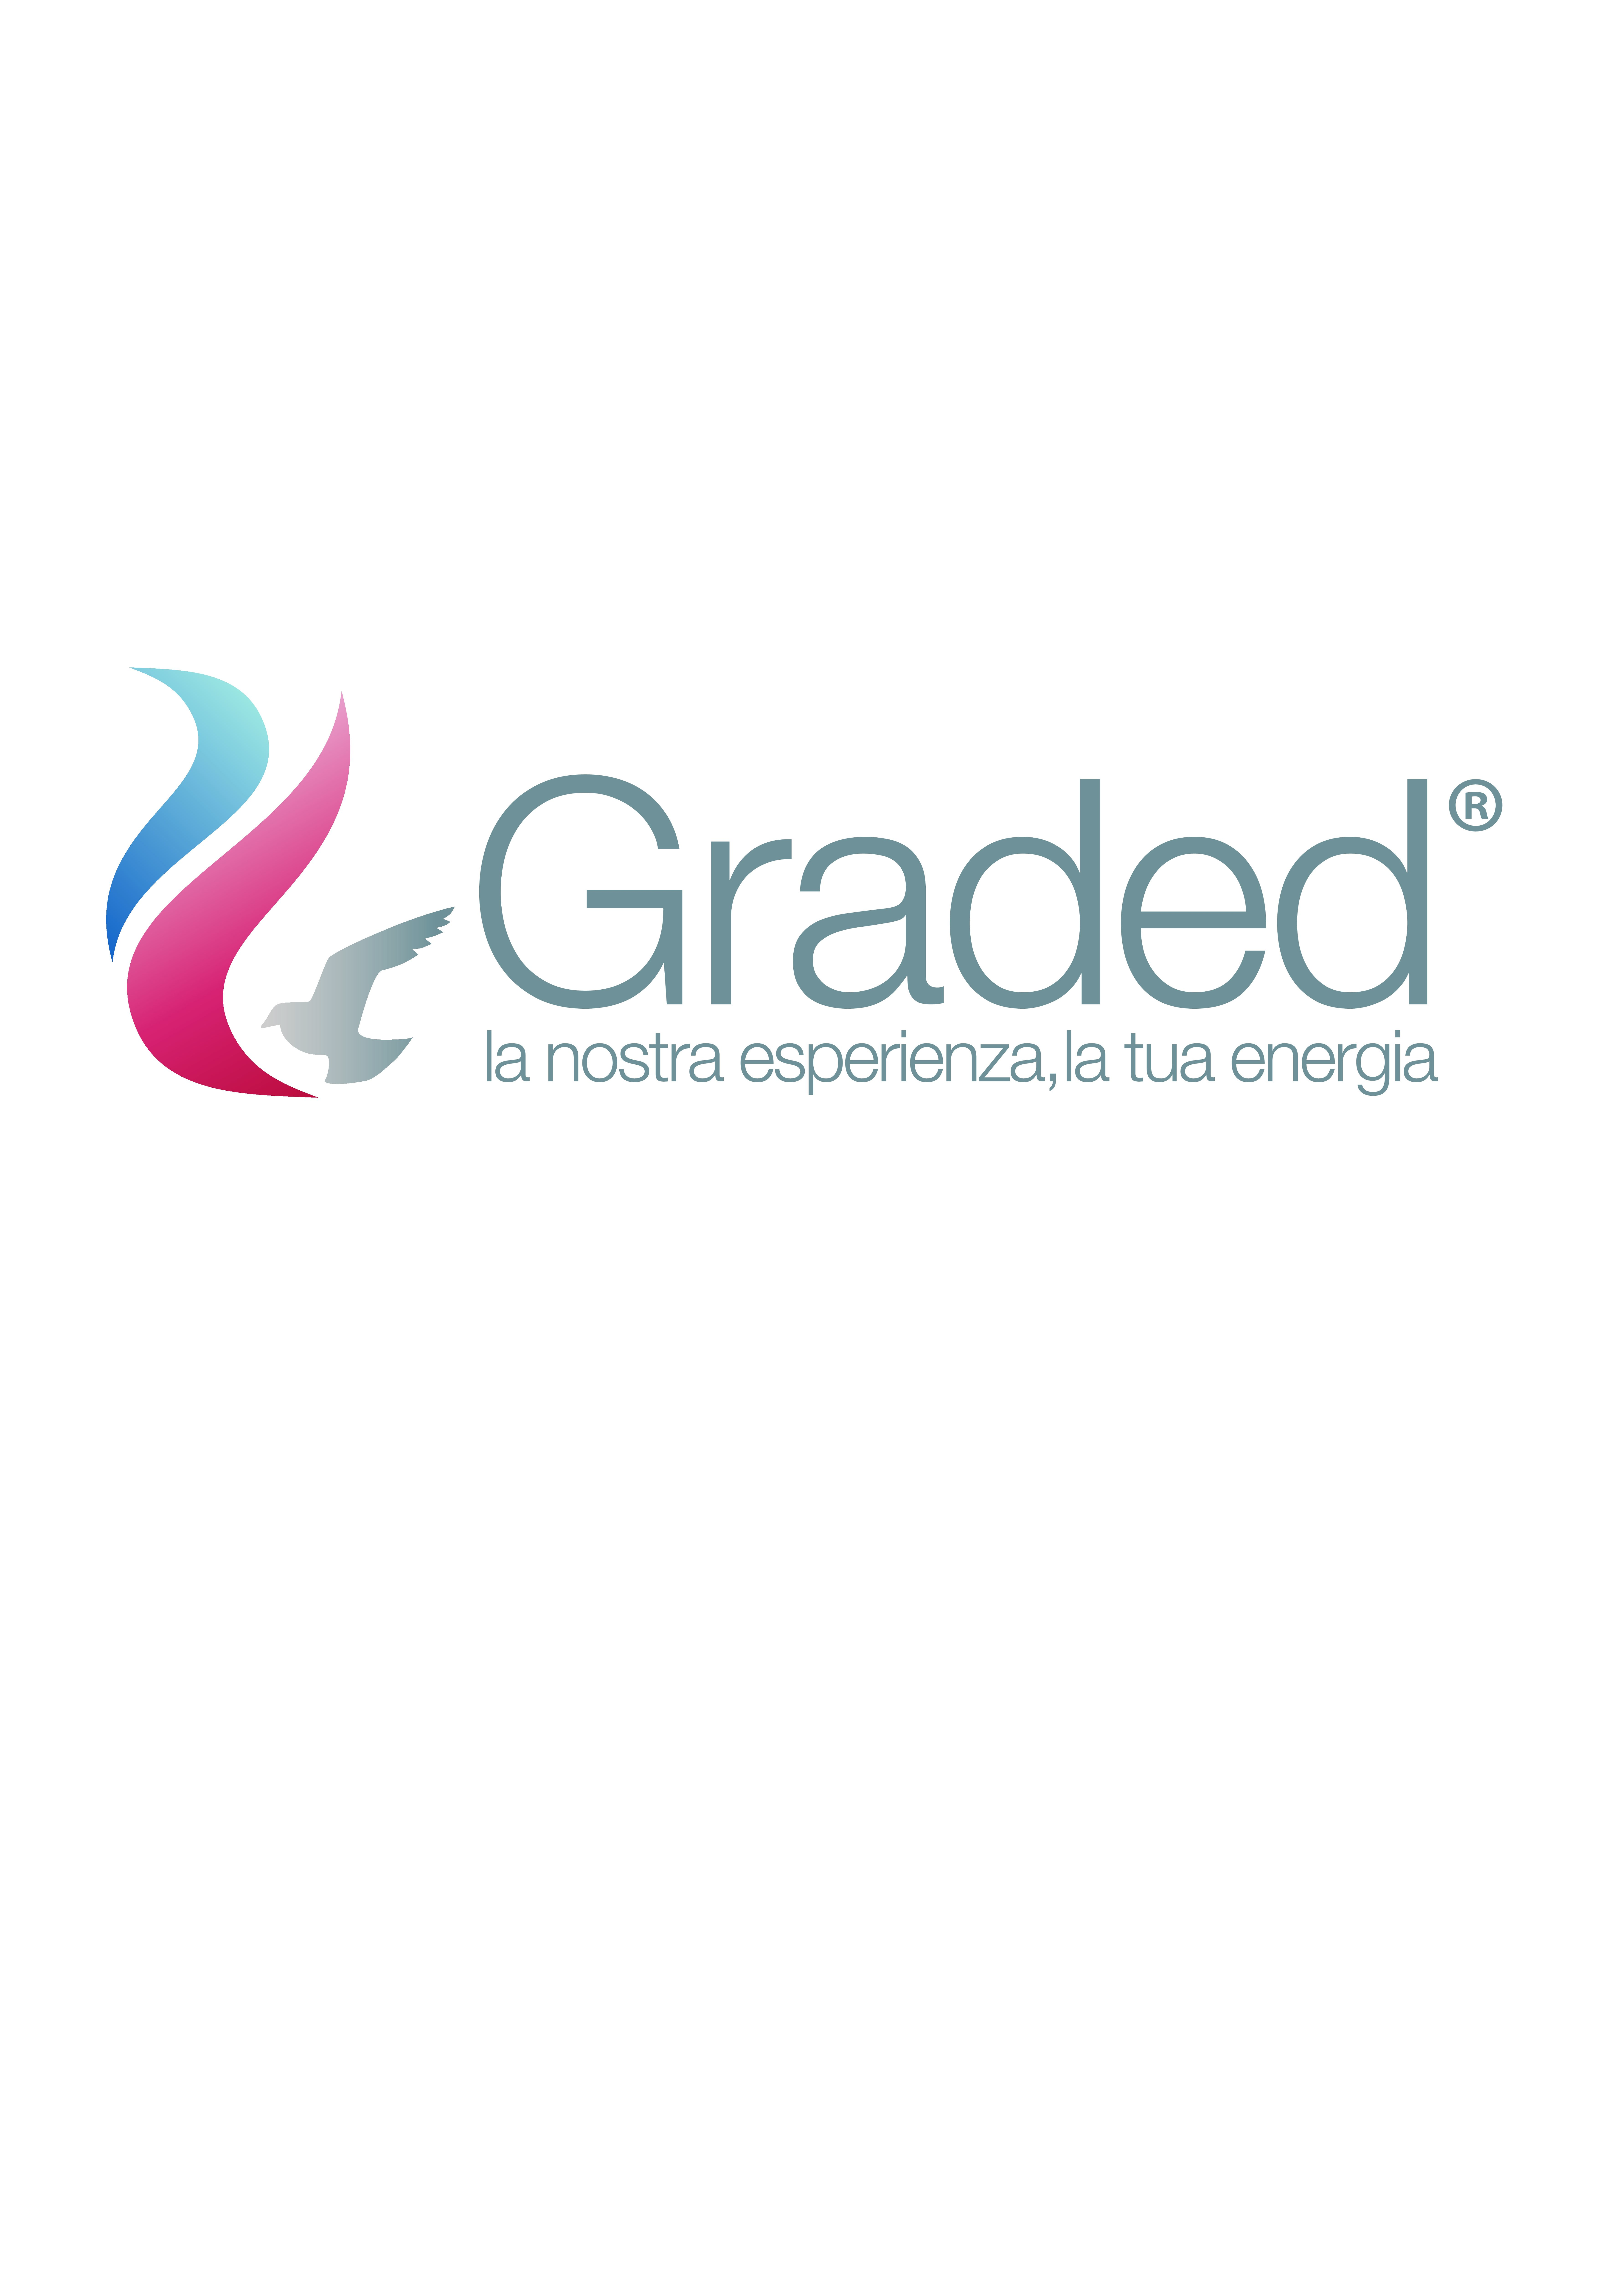 8 Graded logo registrato